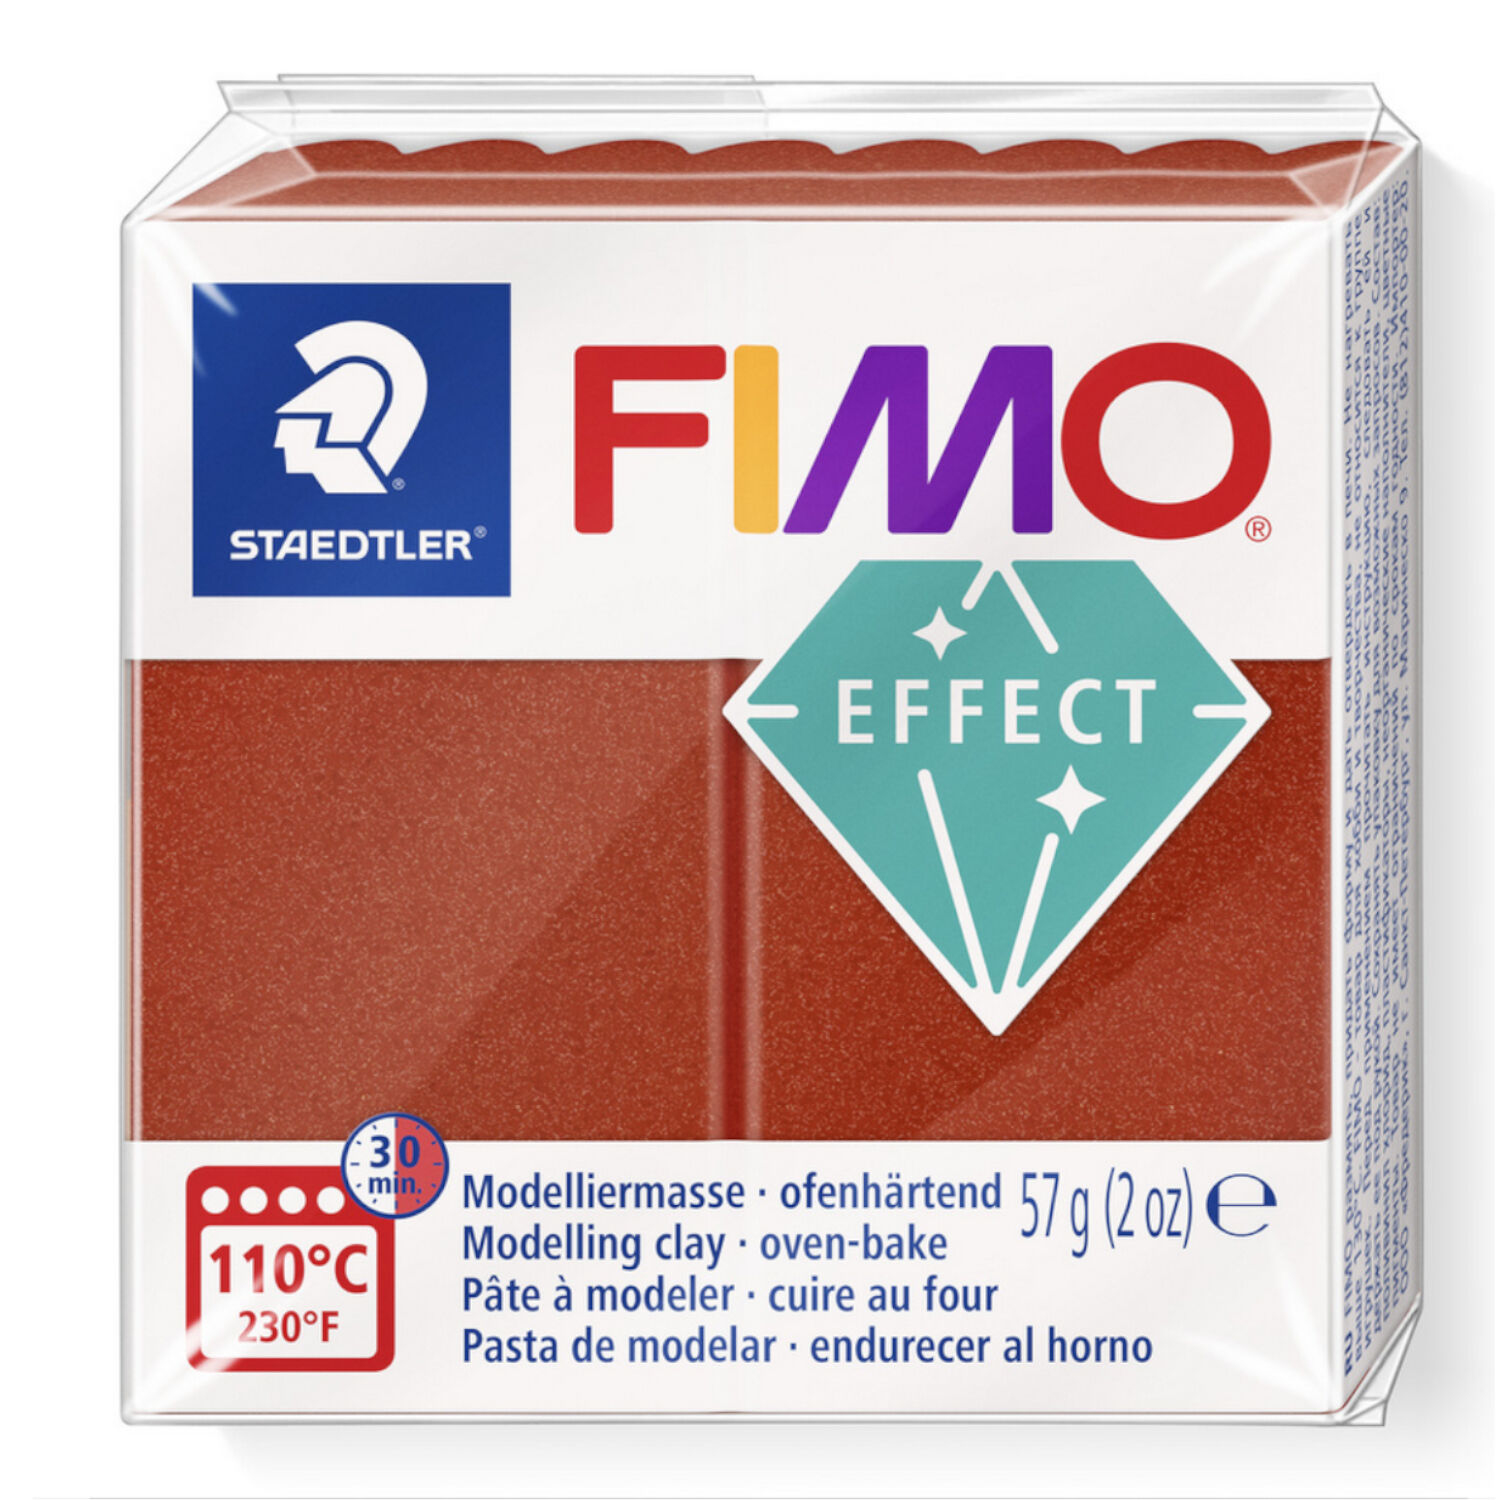 NEU Fimo Effect 57g, Kupfer-Metallic